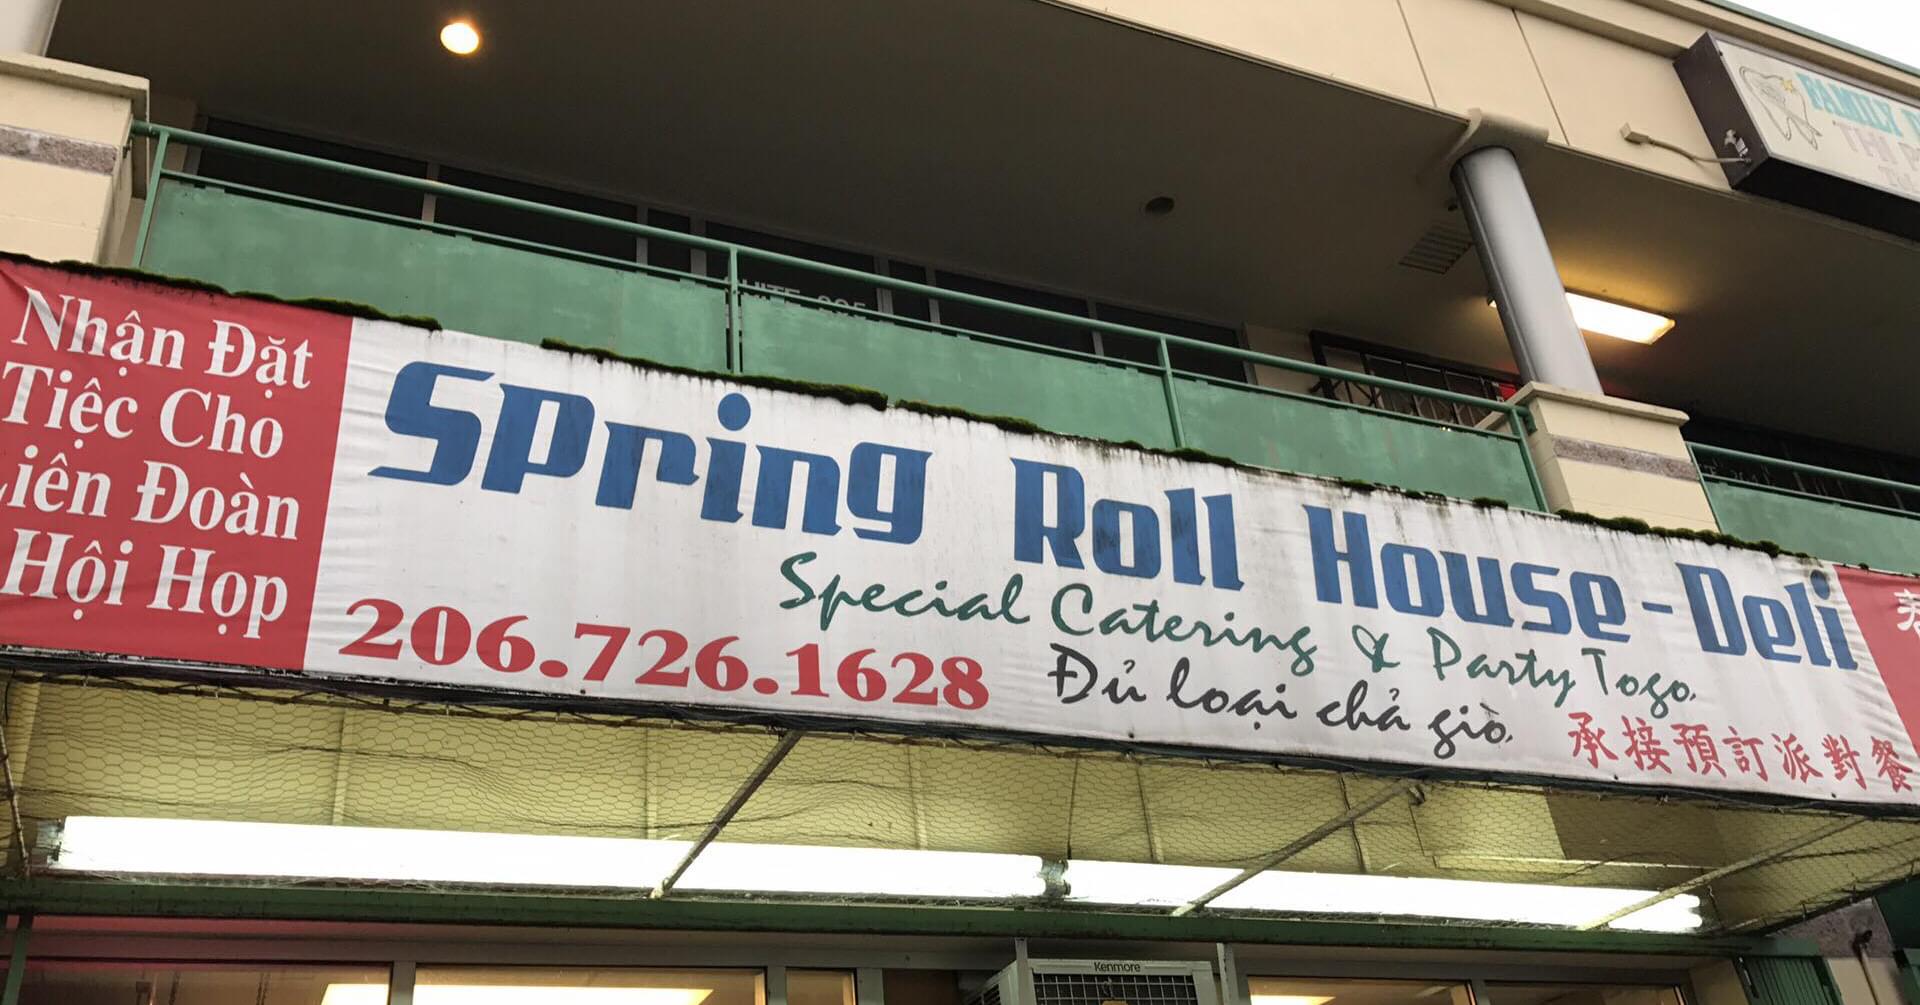 Spring Roll House Deli